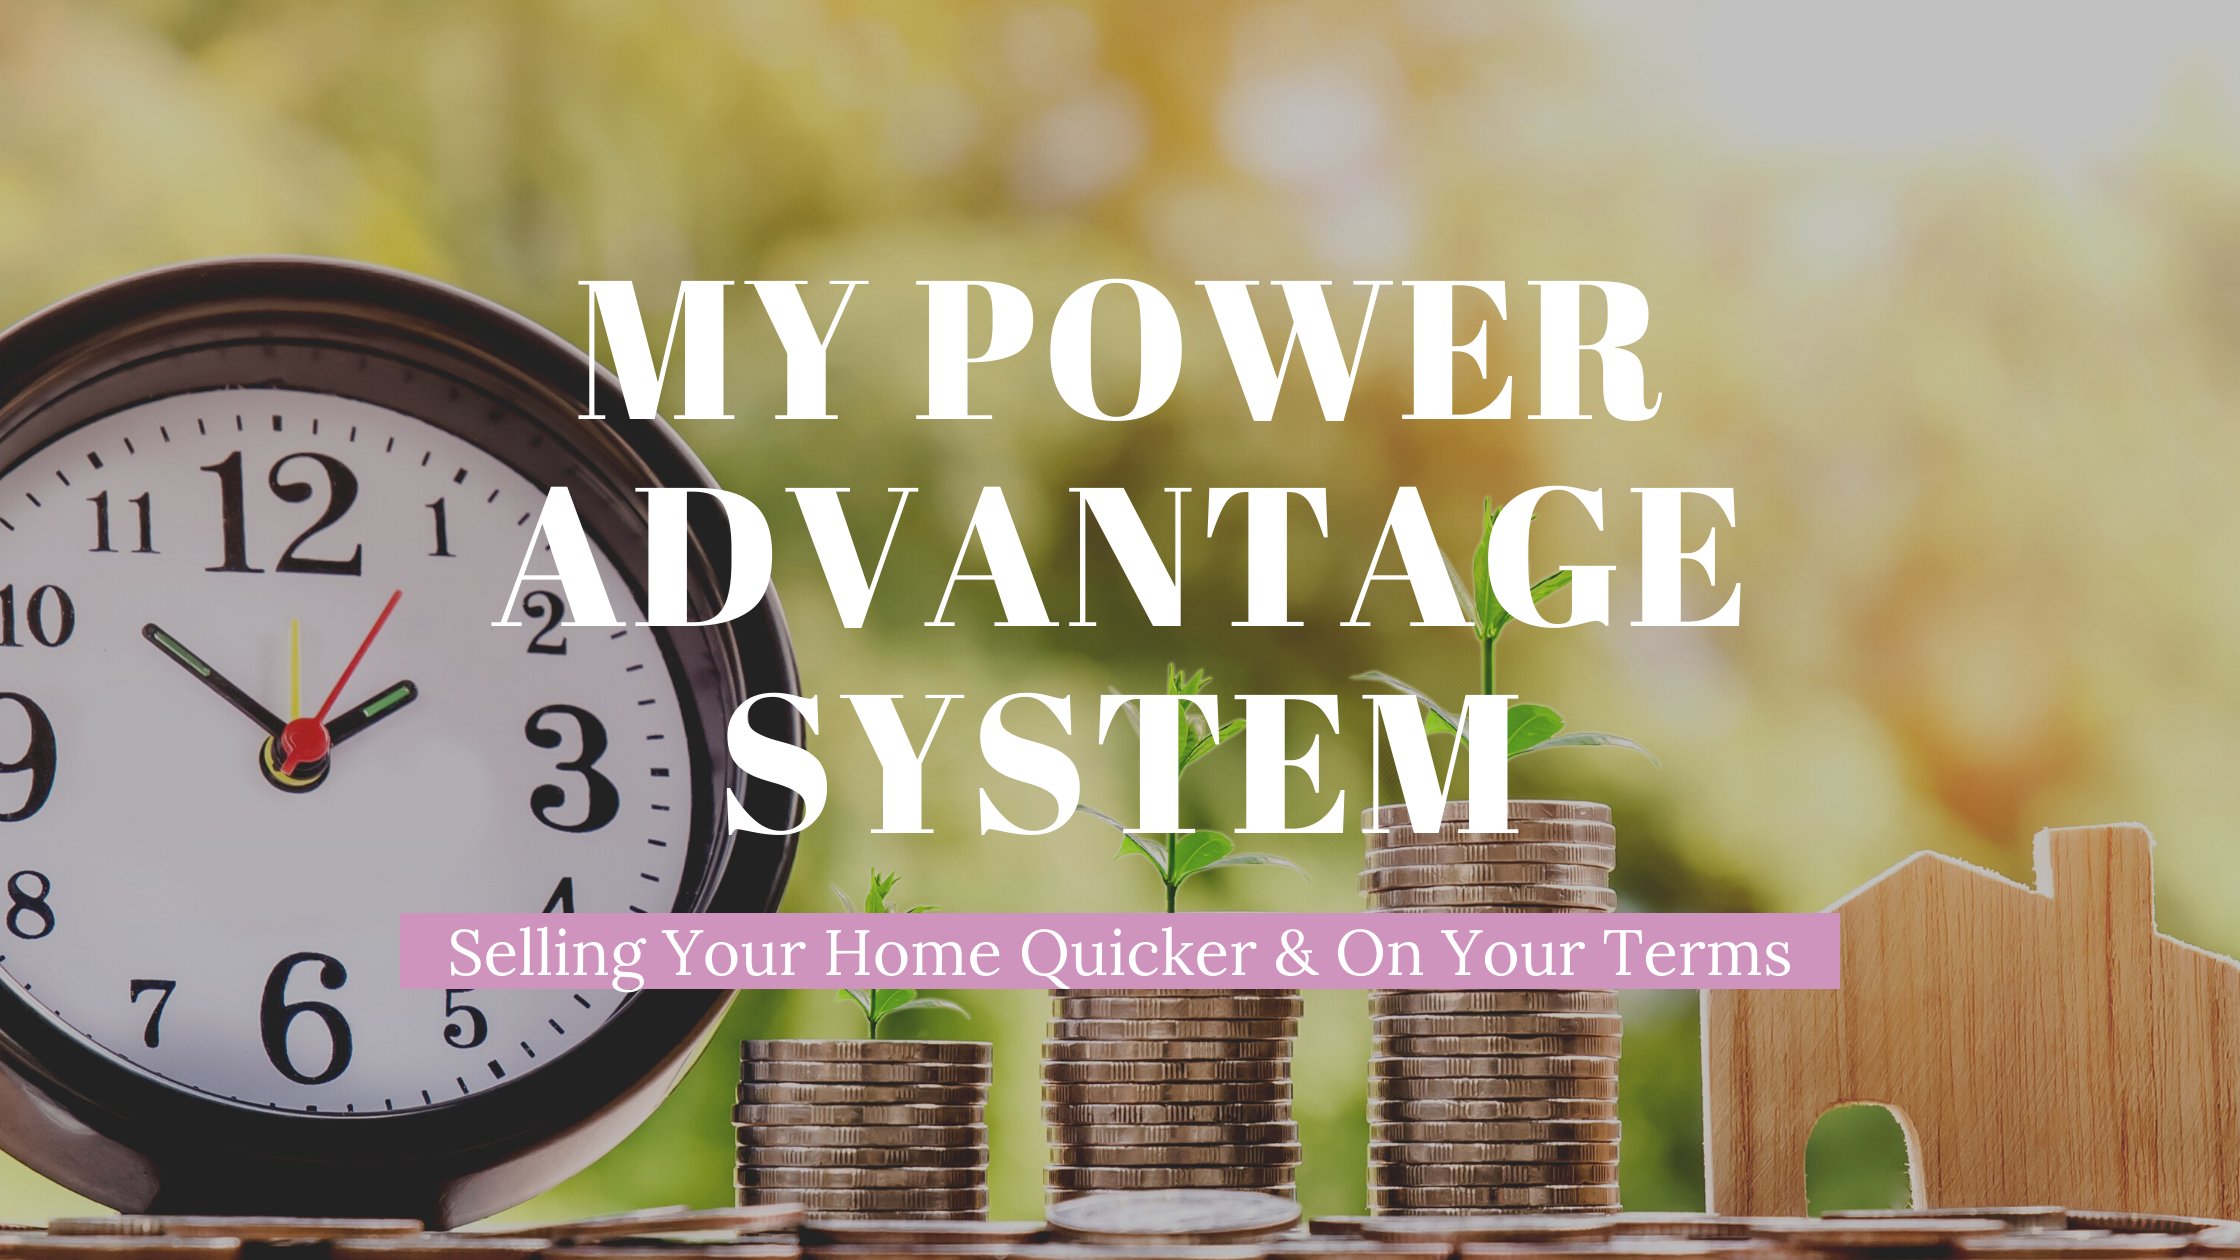 Power Advantage System Blog Post.png